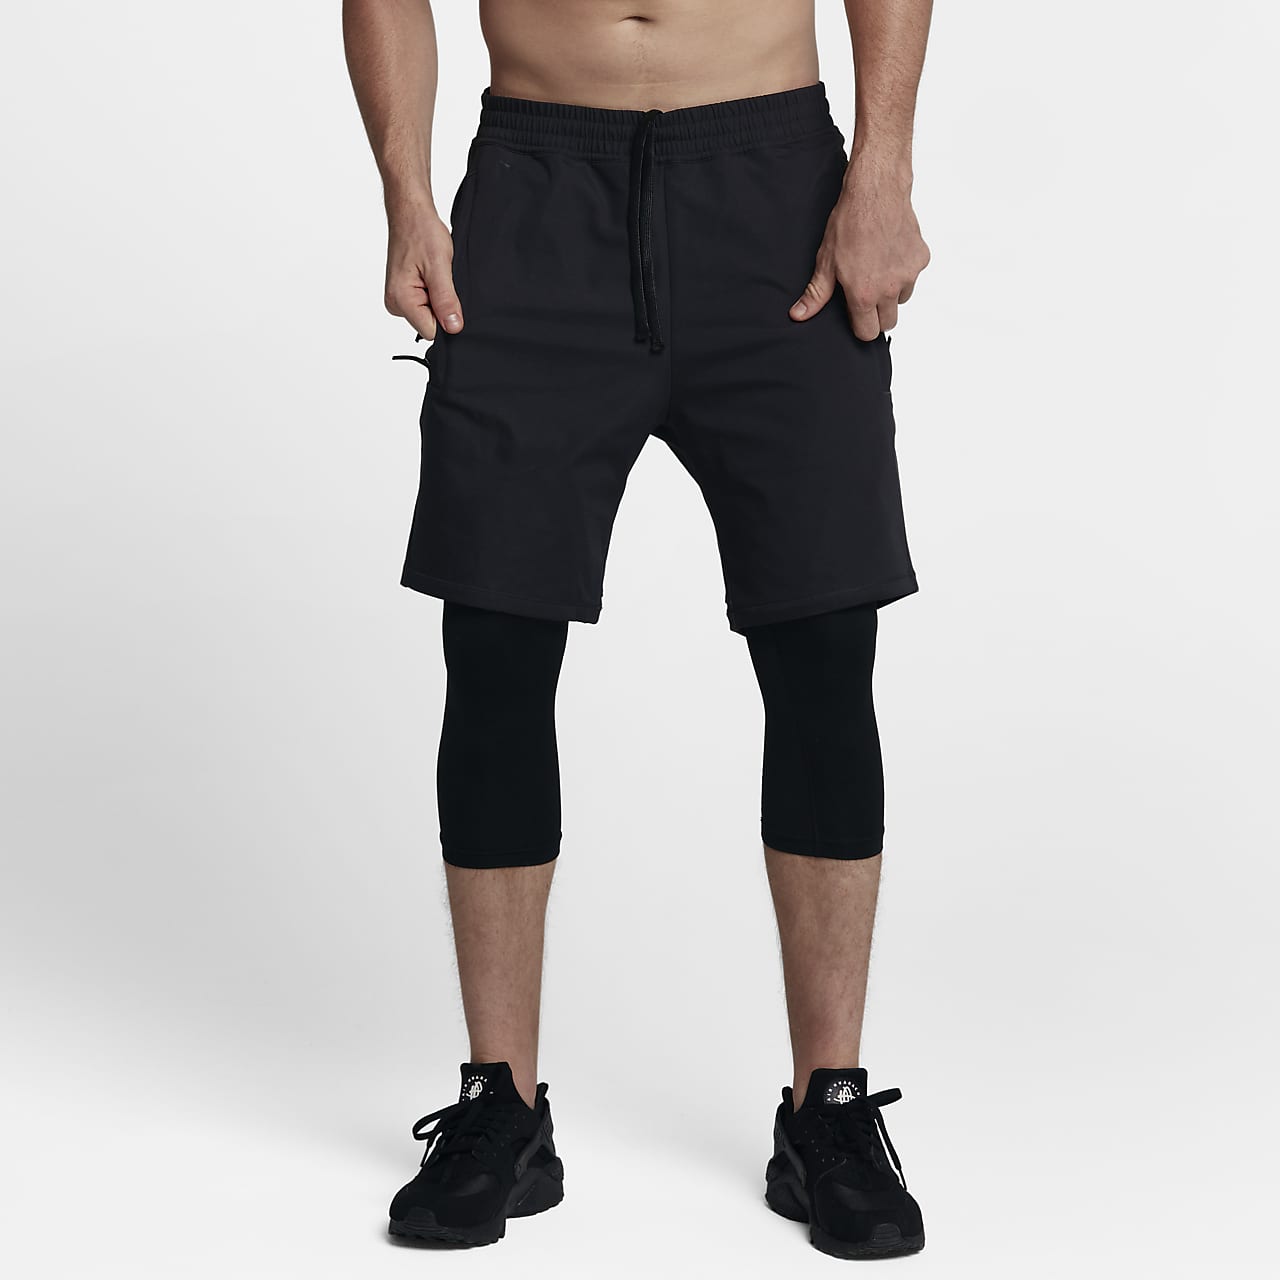 Nike AAE 1.0 Men's Shorts